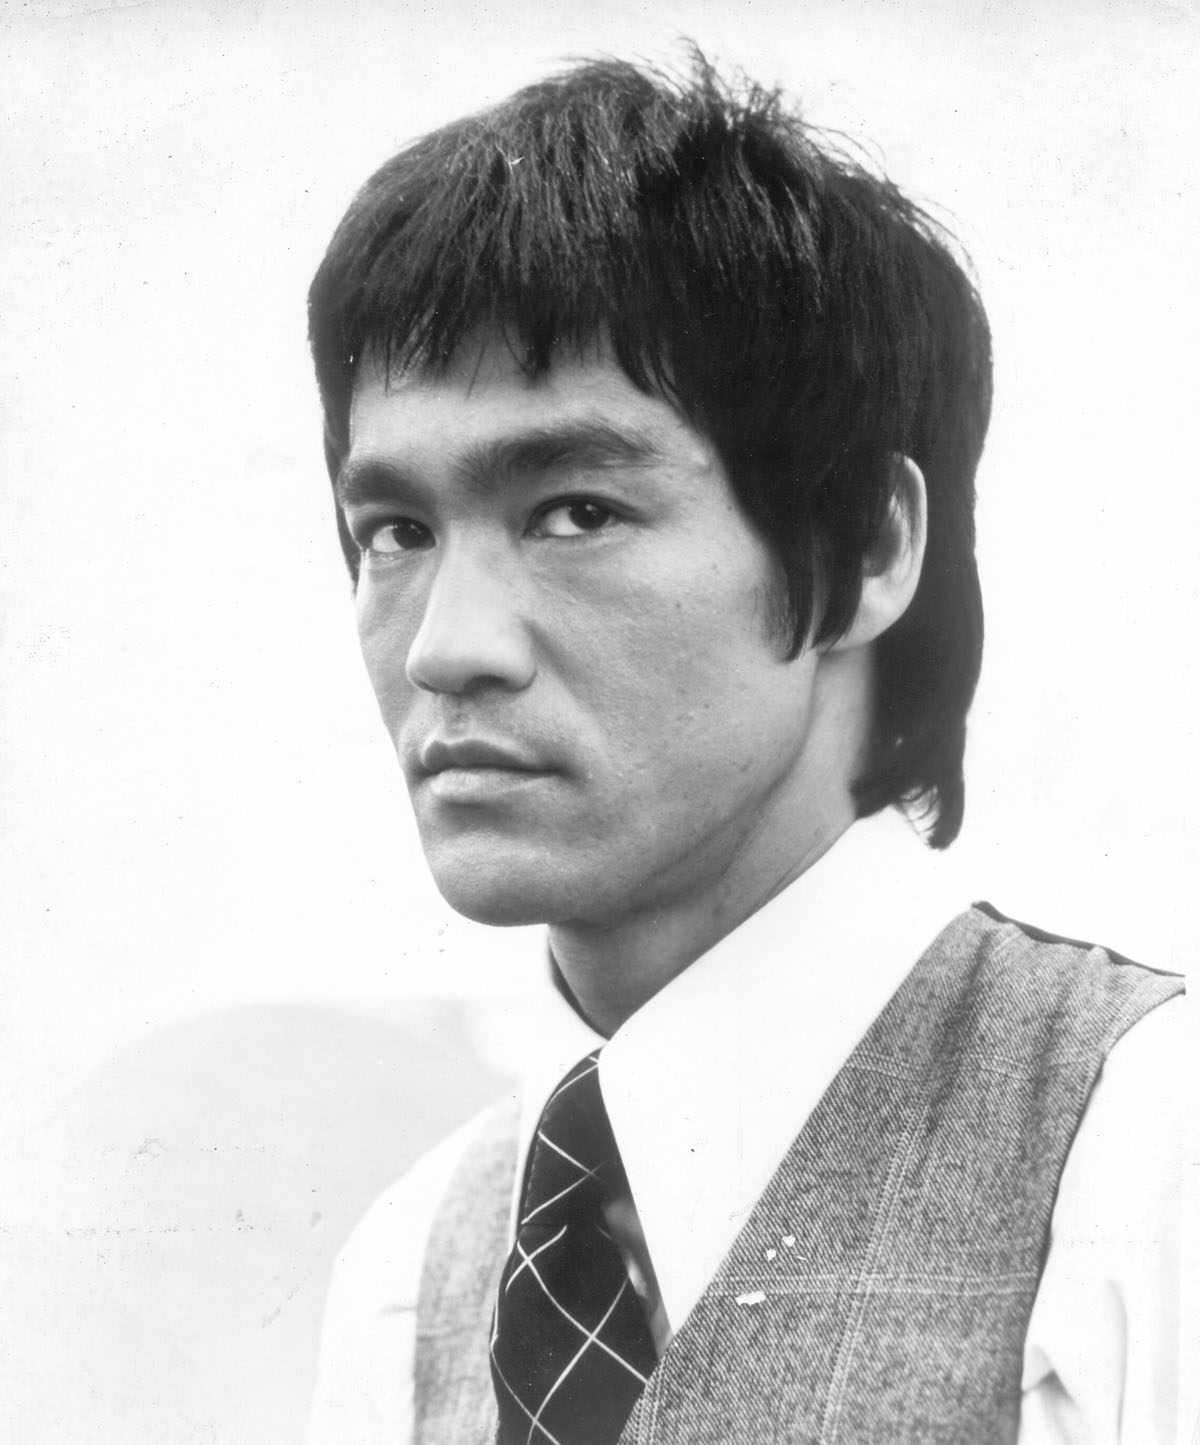 Kung Fu movie legend Bruce Lee